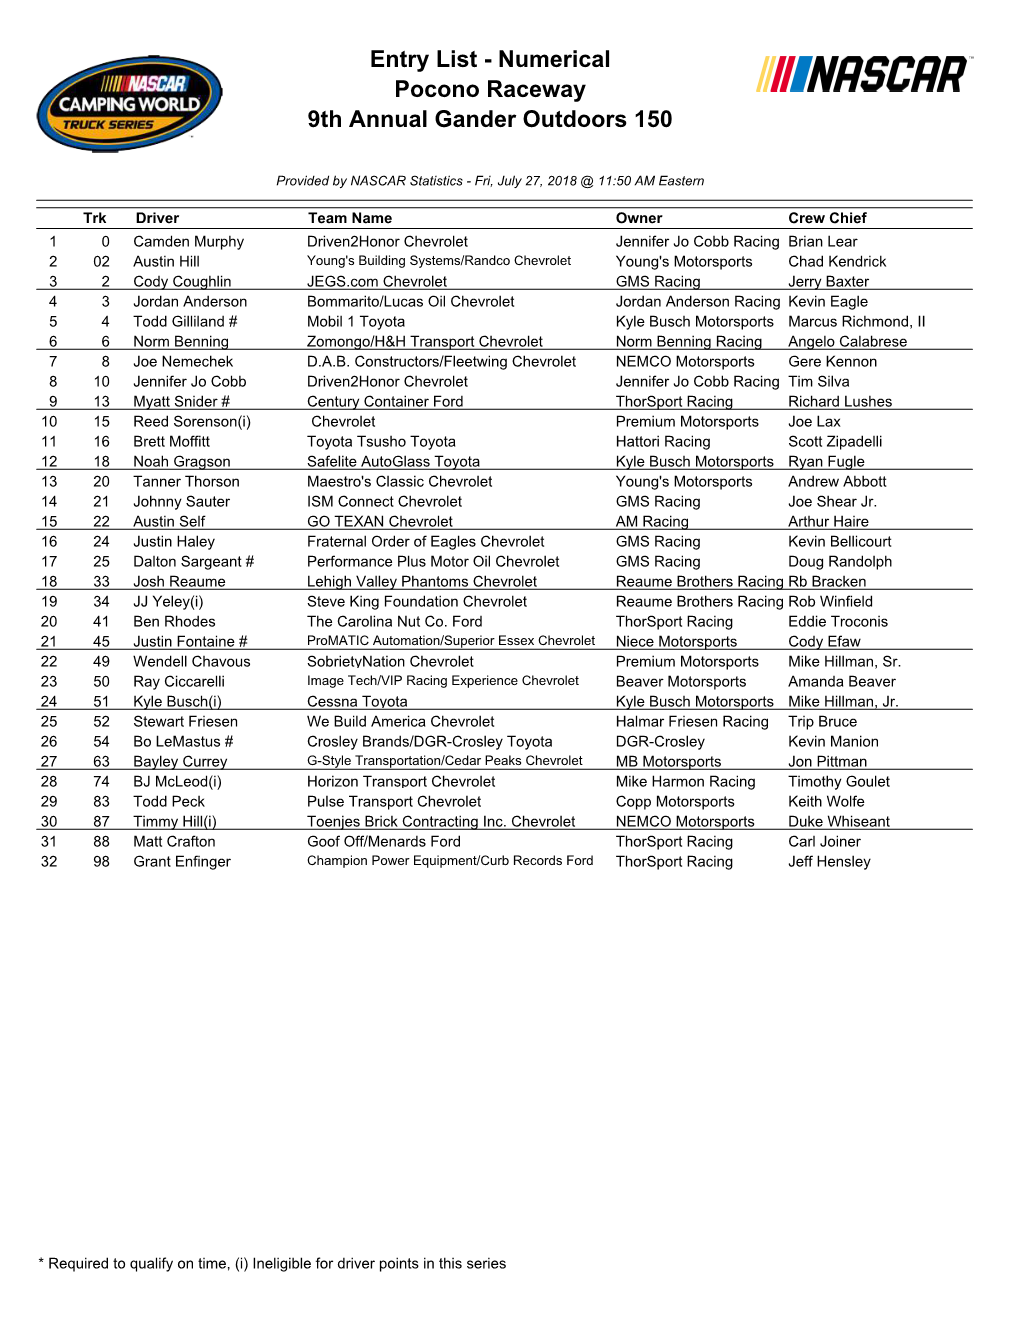 Entry List - Numerical Pocono Raceway 9Th Annual Gander Outdoors 150